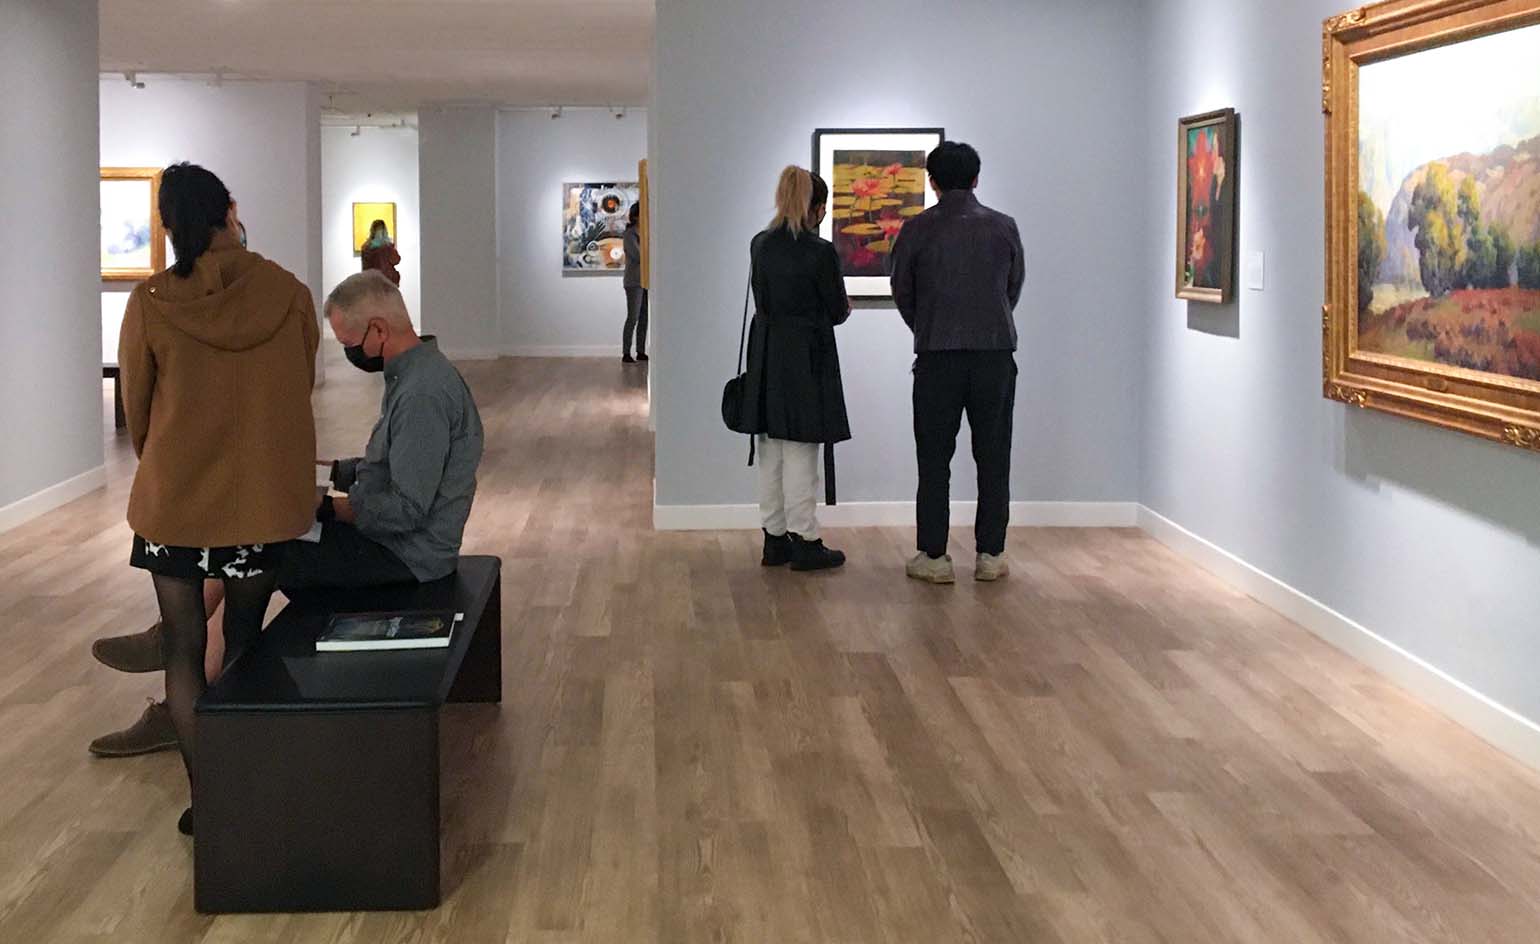 Museum visitors looking at art